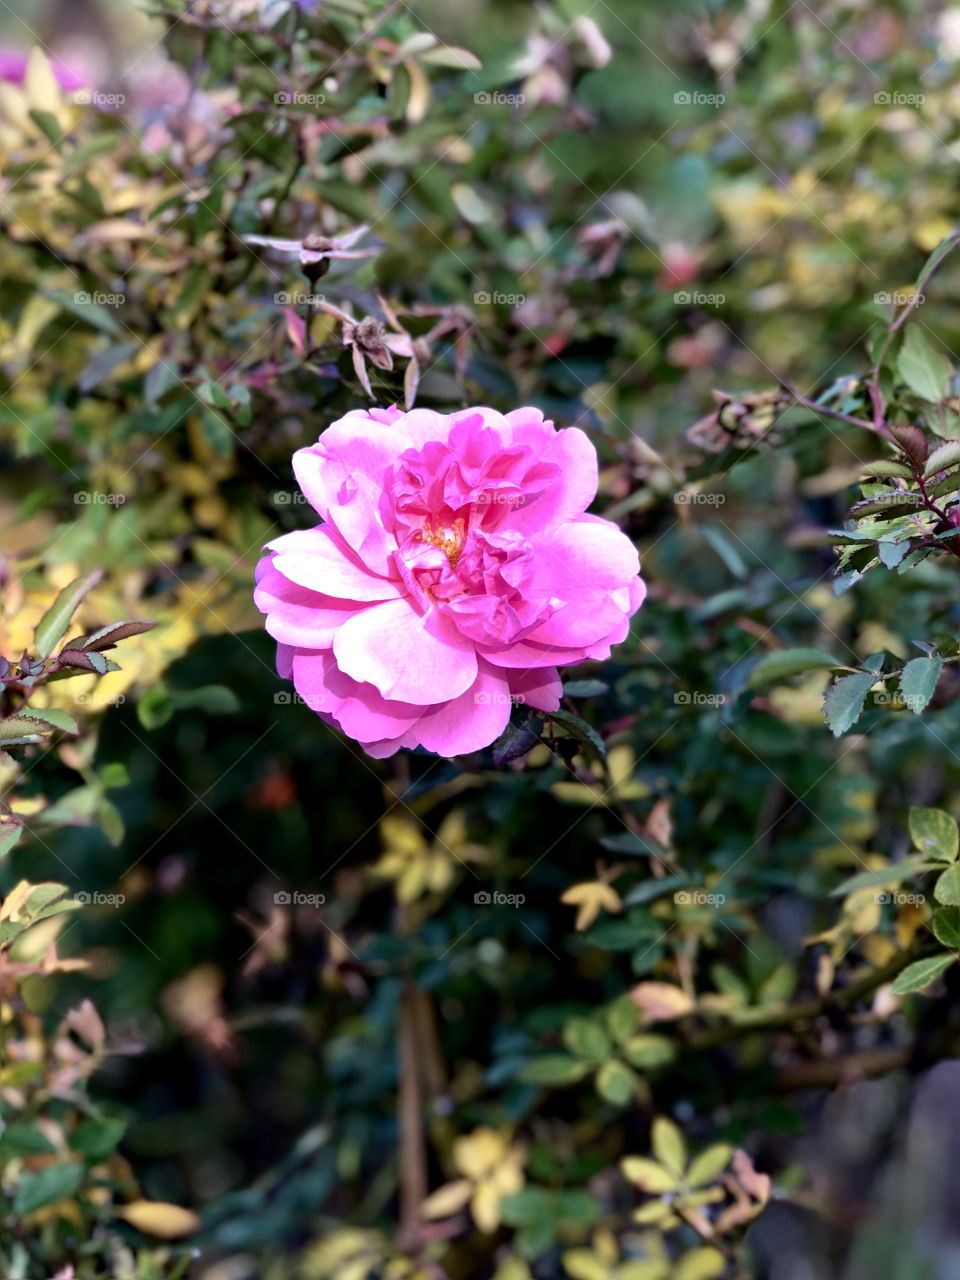 Last rose of the season